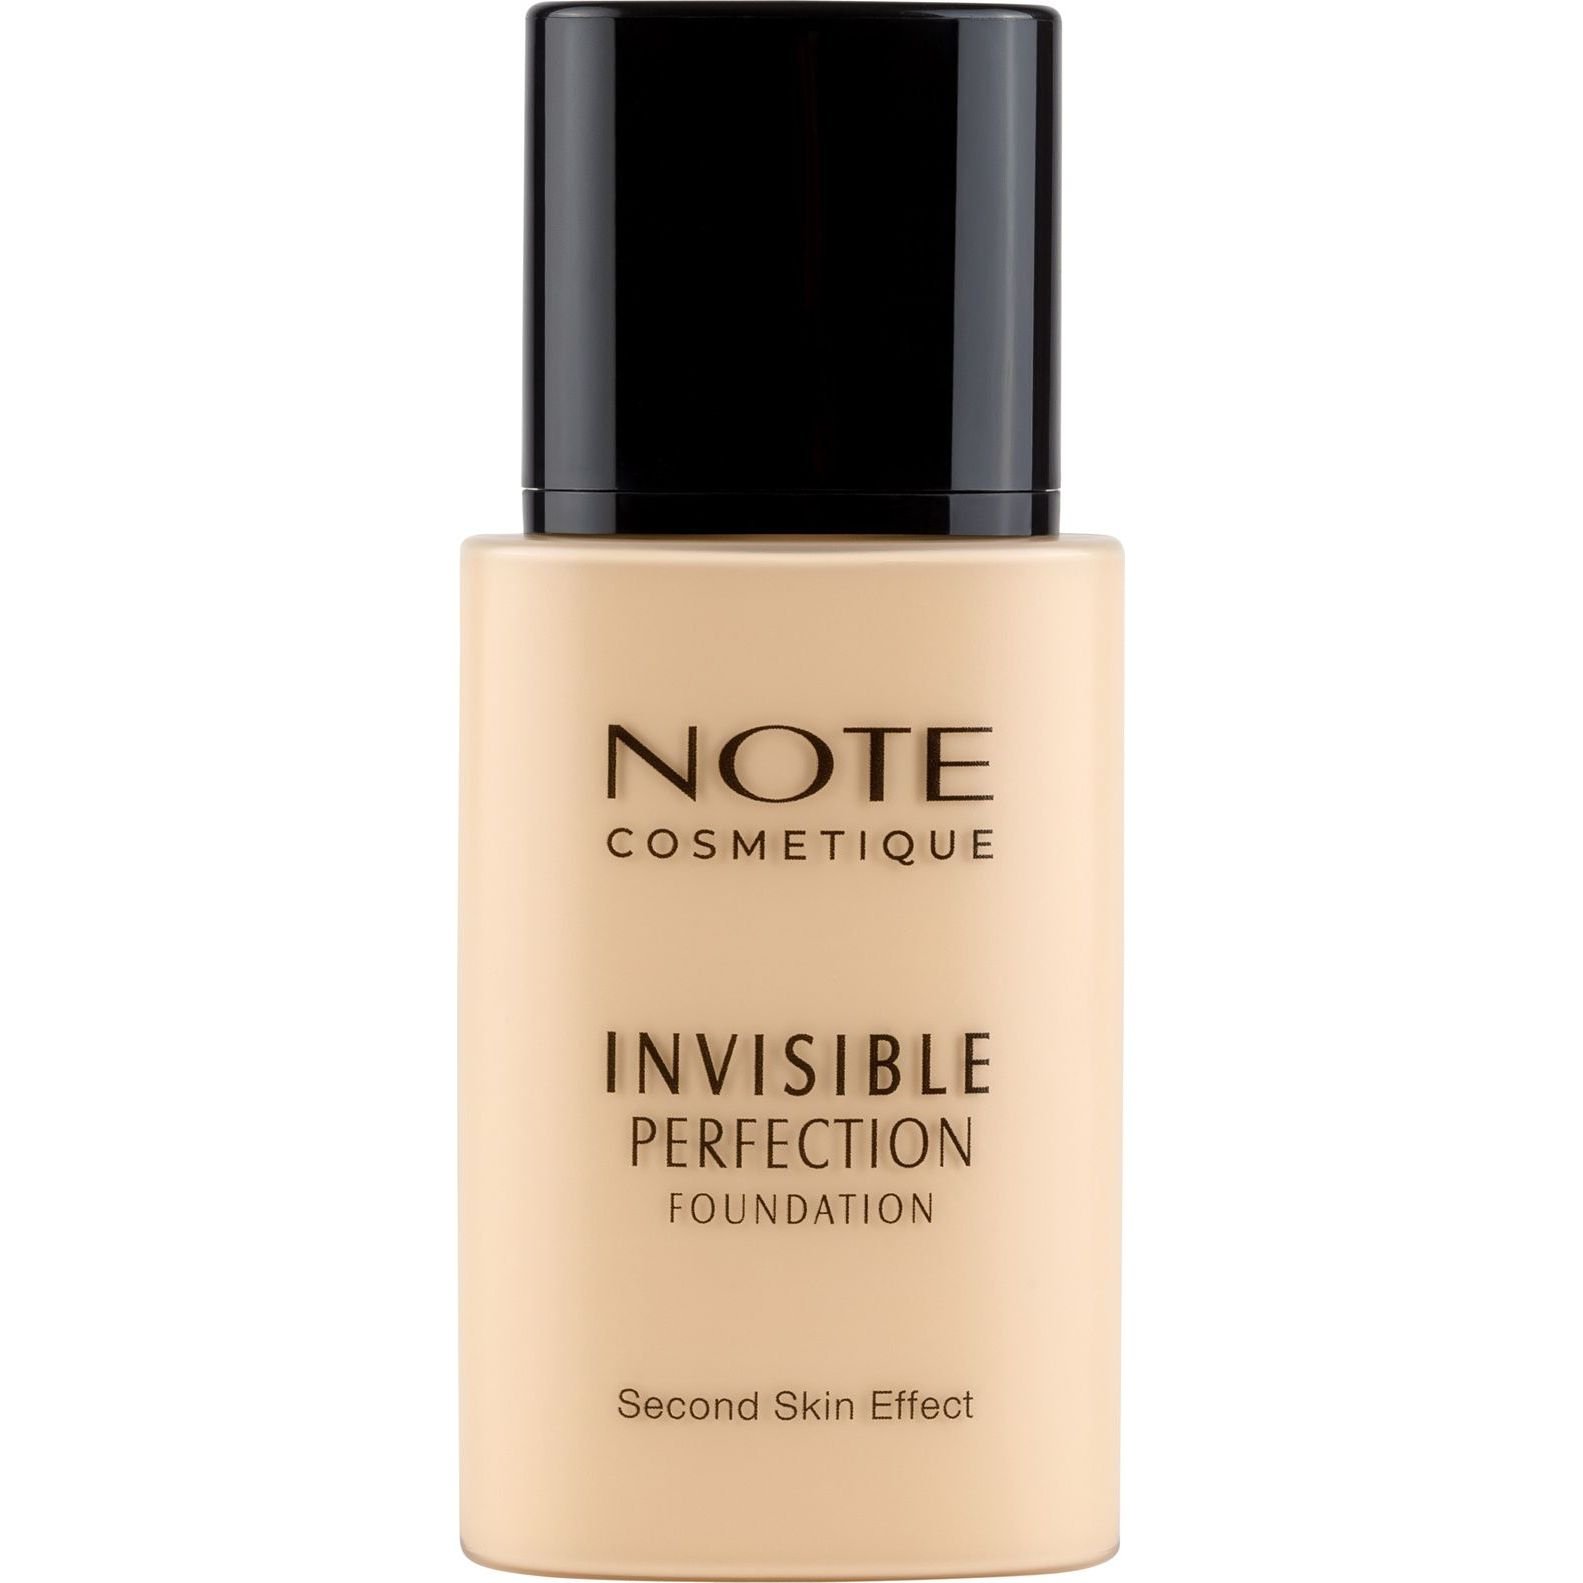 Тональная основа Note Cosmetique Invisible Perfection Foundation тон 100 (Bare Sand) 35 мл - фото 1